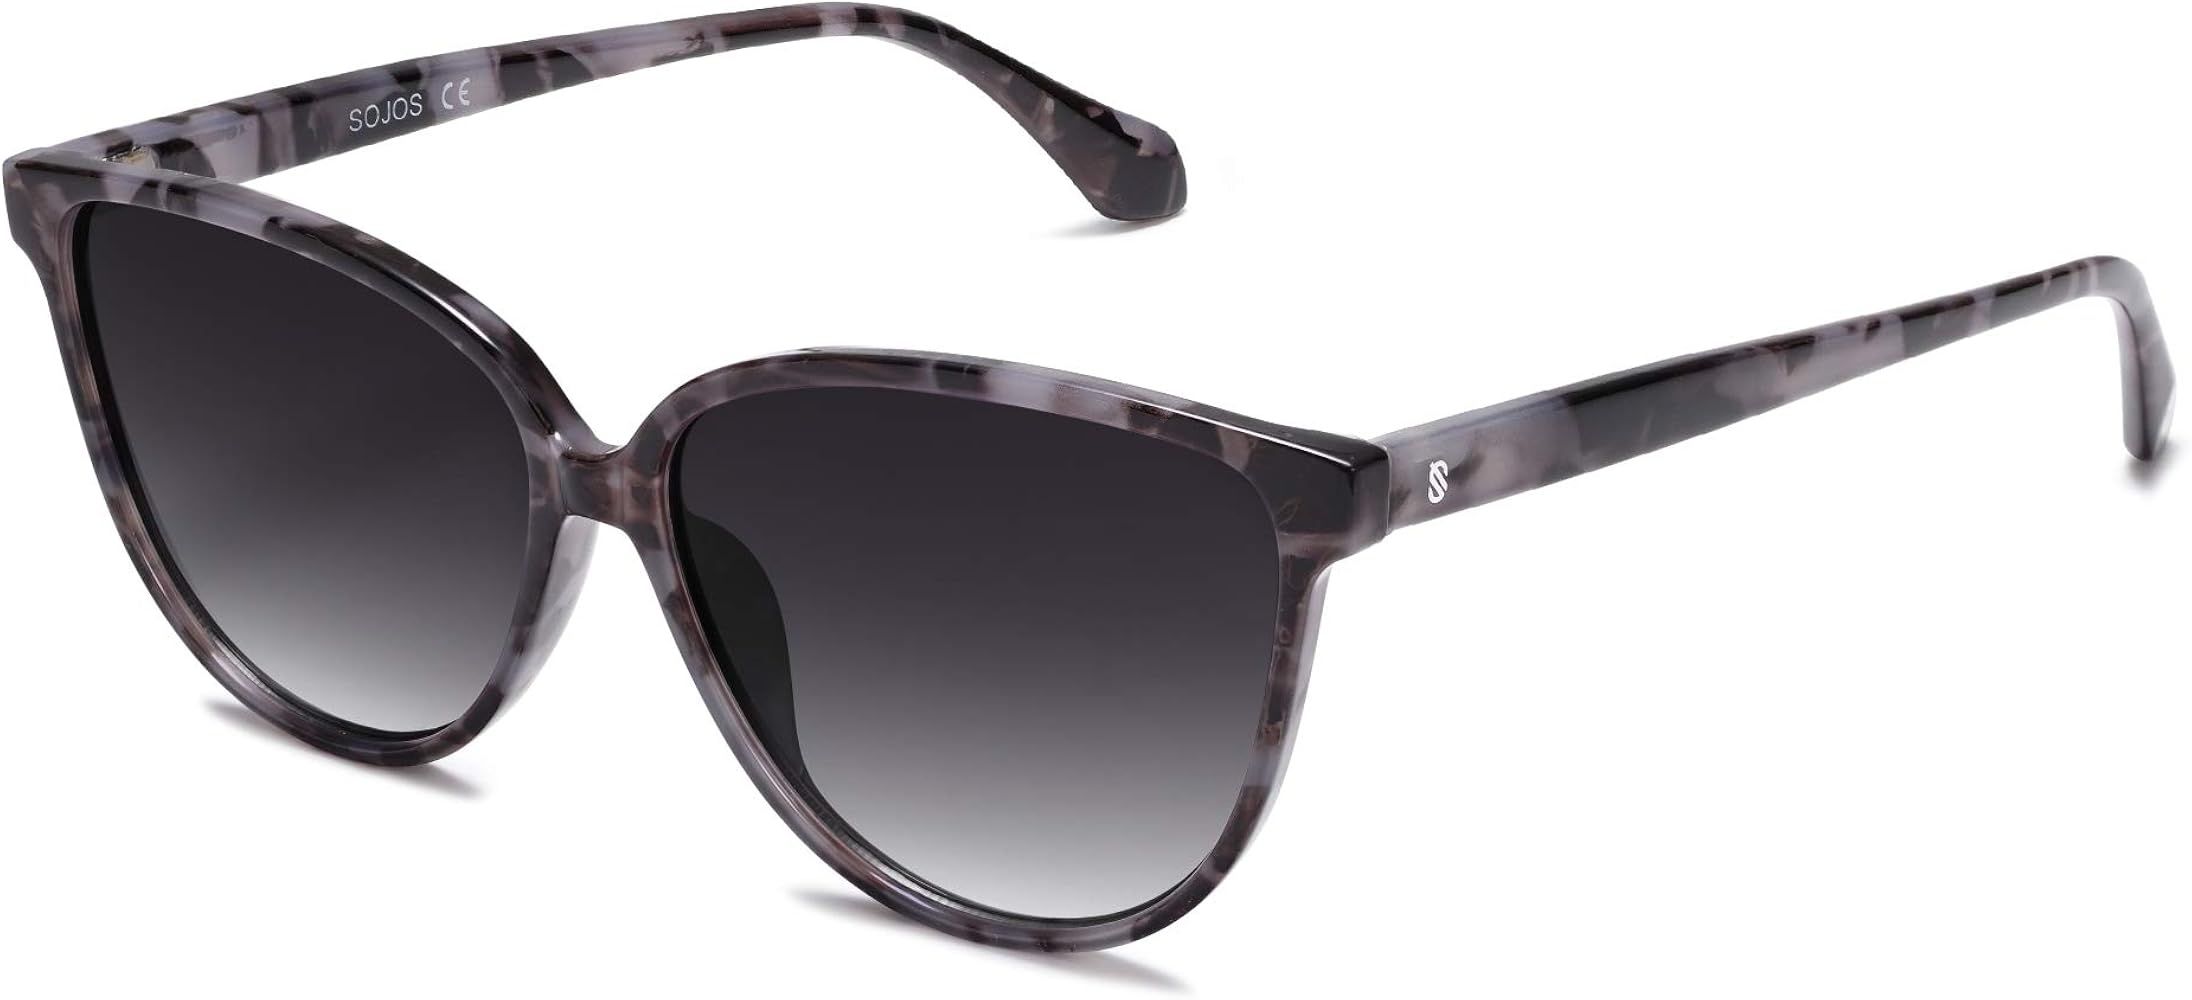 SOJOS Classic Oversized Cateye Sunglasses Vintage Shades UV400 Lenses SJ2096 | Amazon (US)